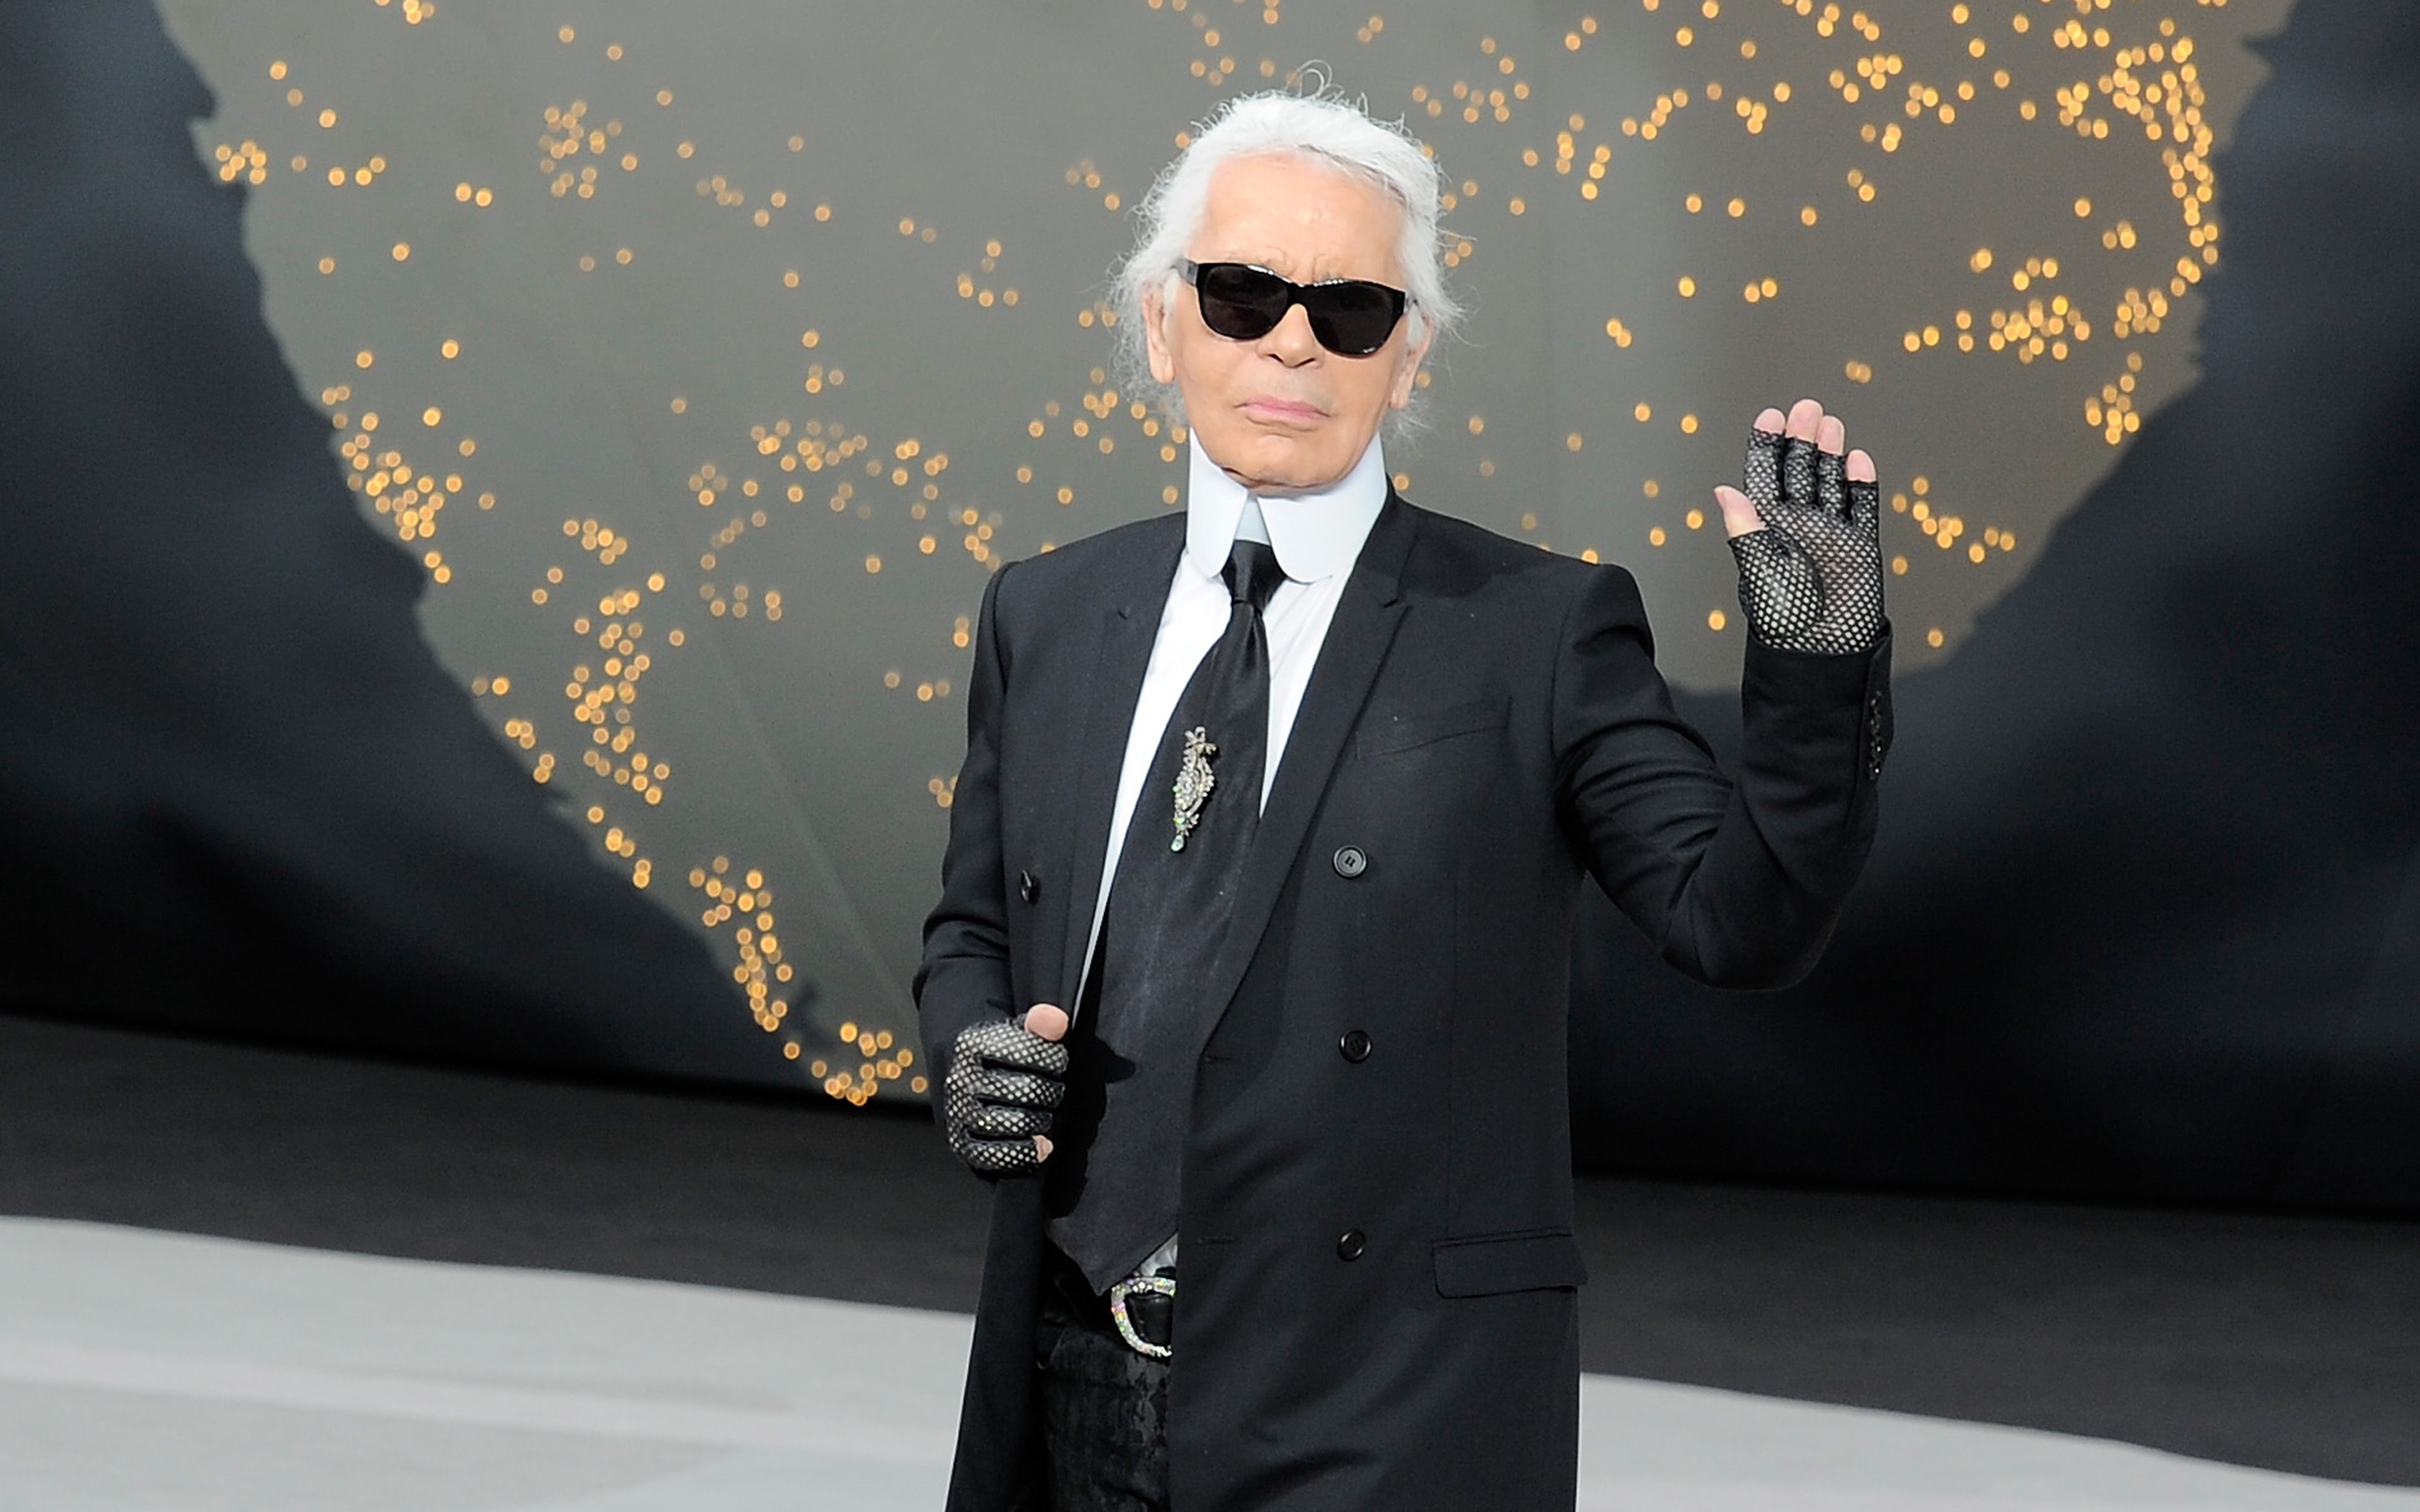 Karl Lagerfeld: Celebrating the Late Fashion Legend through Style, Fashion